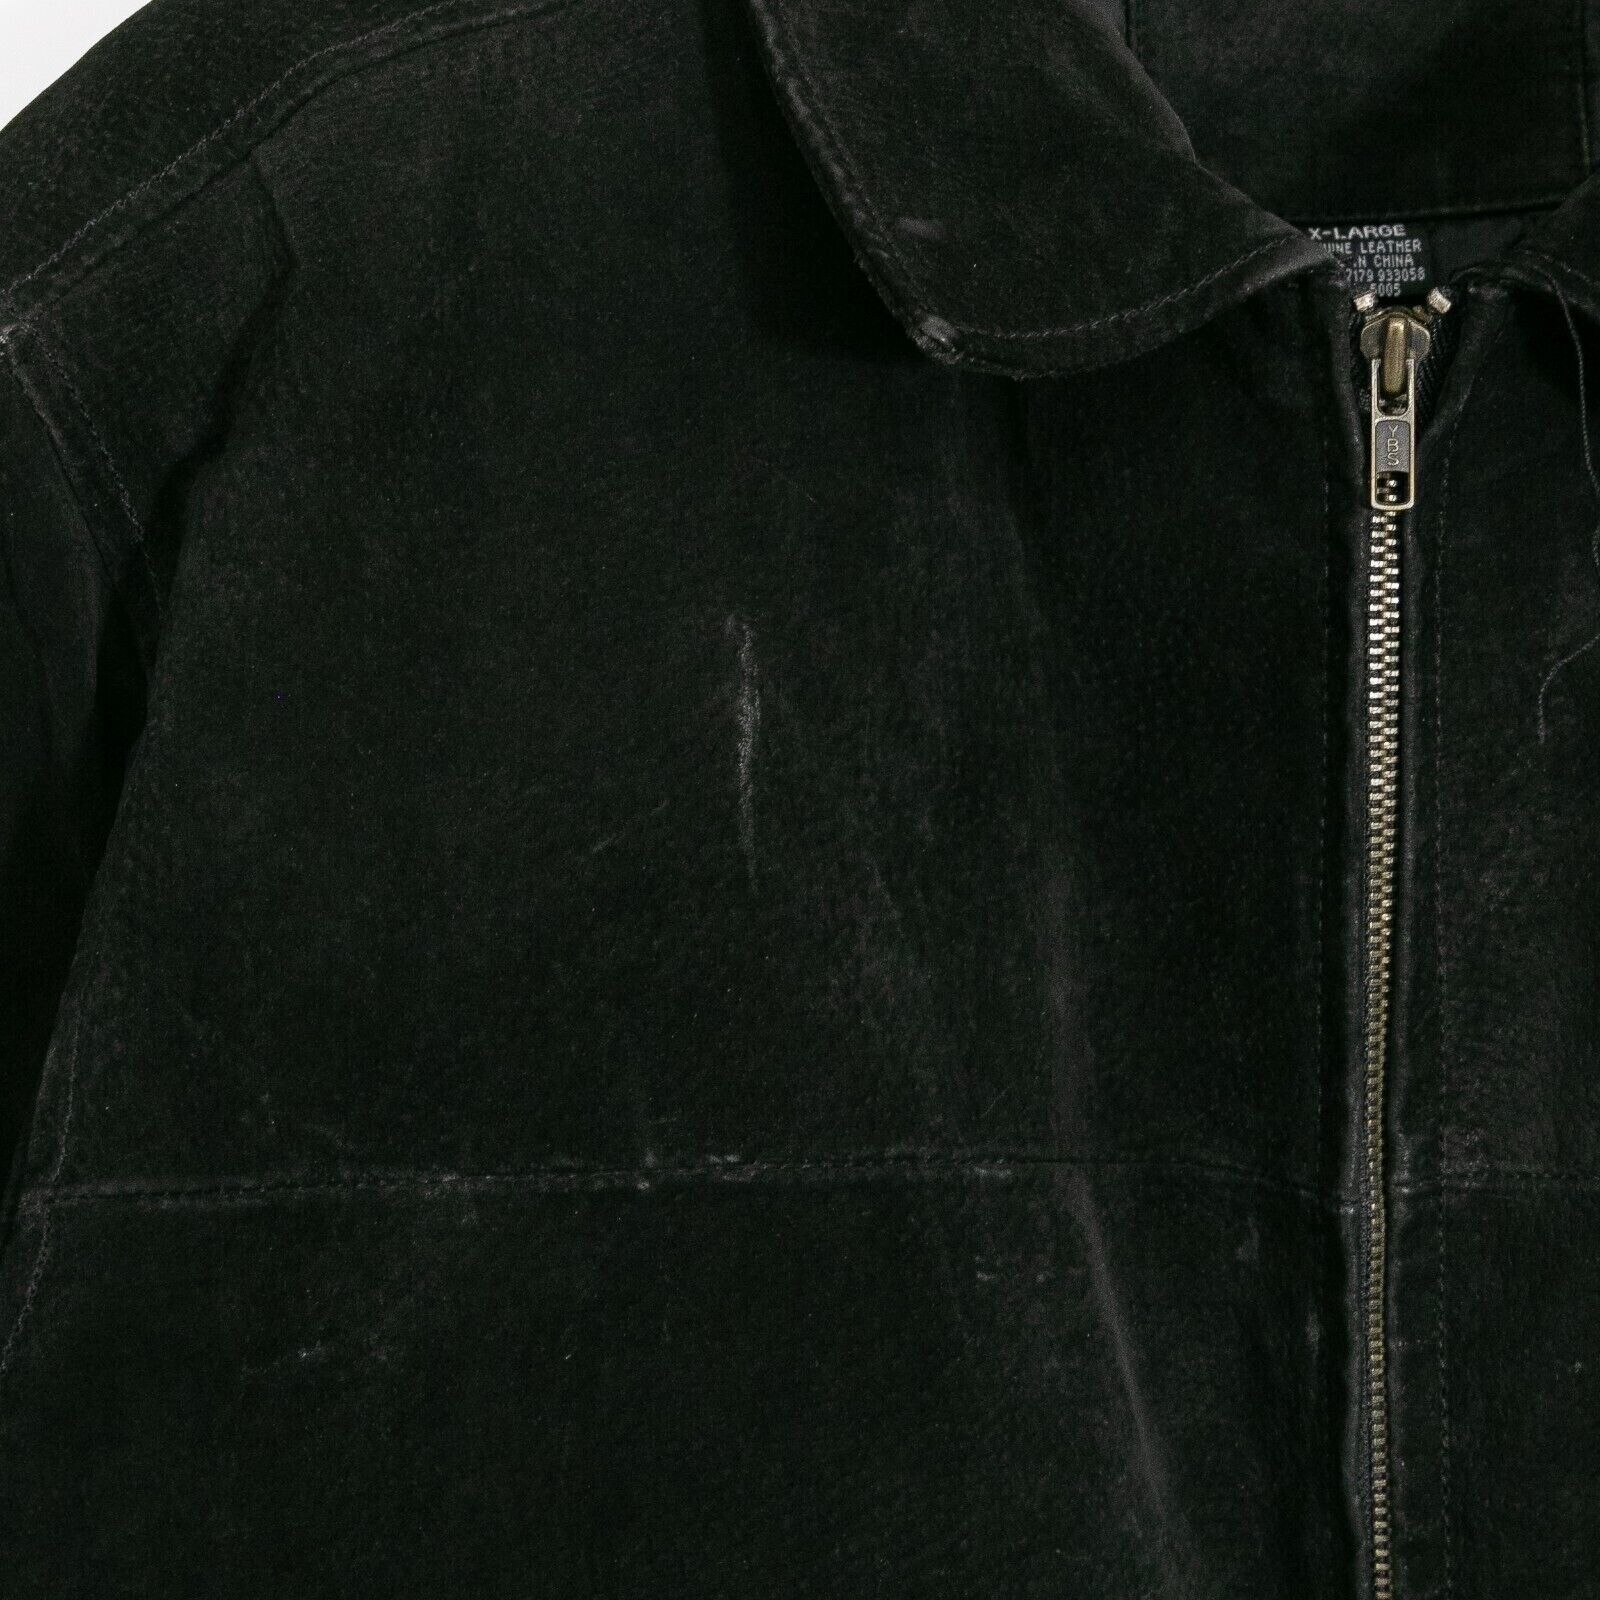 Vintage Vintage Black Suede Zip Up Jacket XL - Patina Distressed Size US XL / EU 56 / 4 - 4 Thumbnail